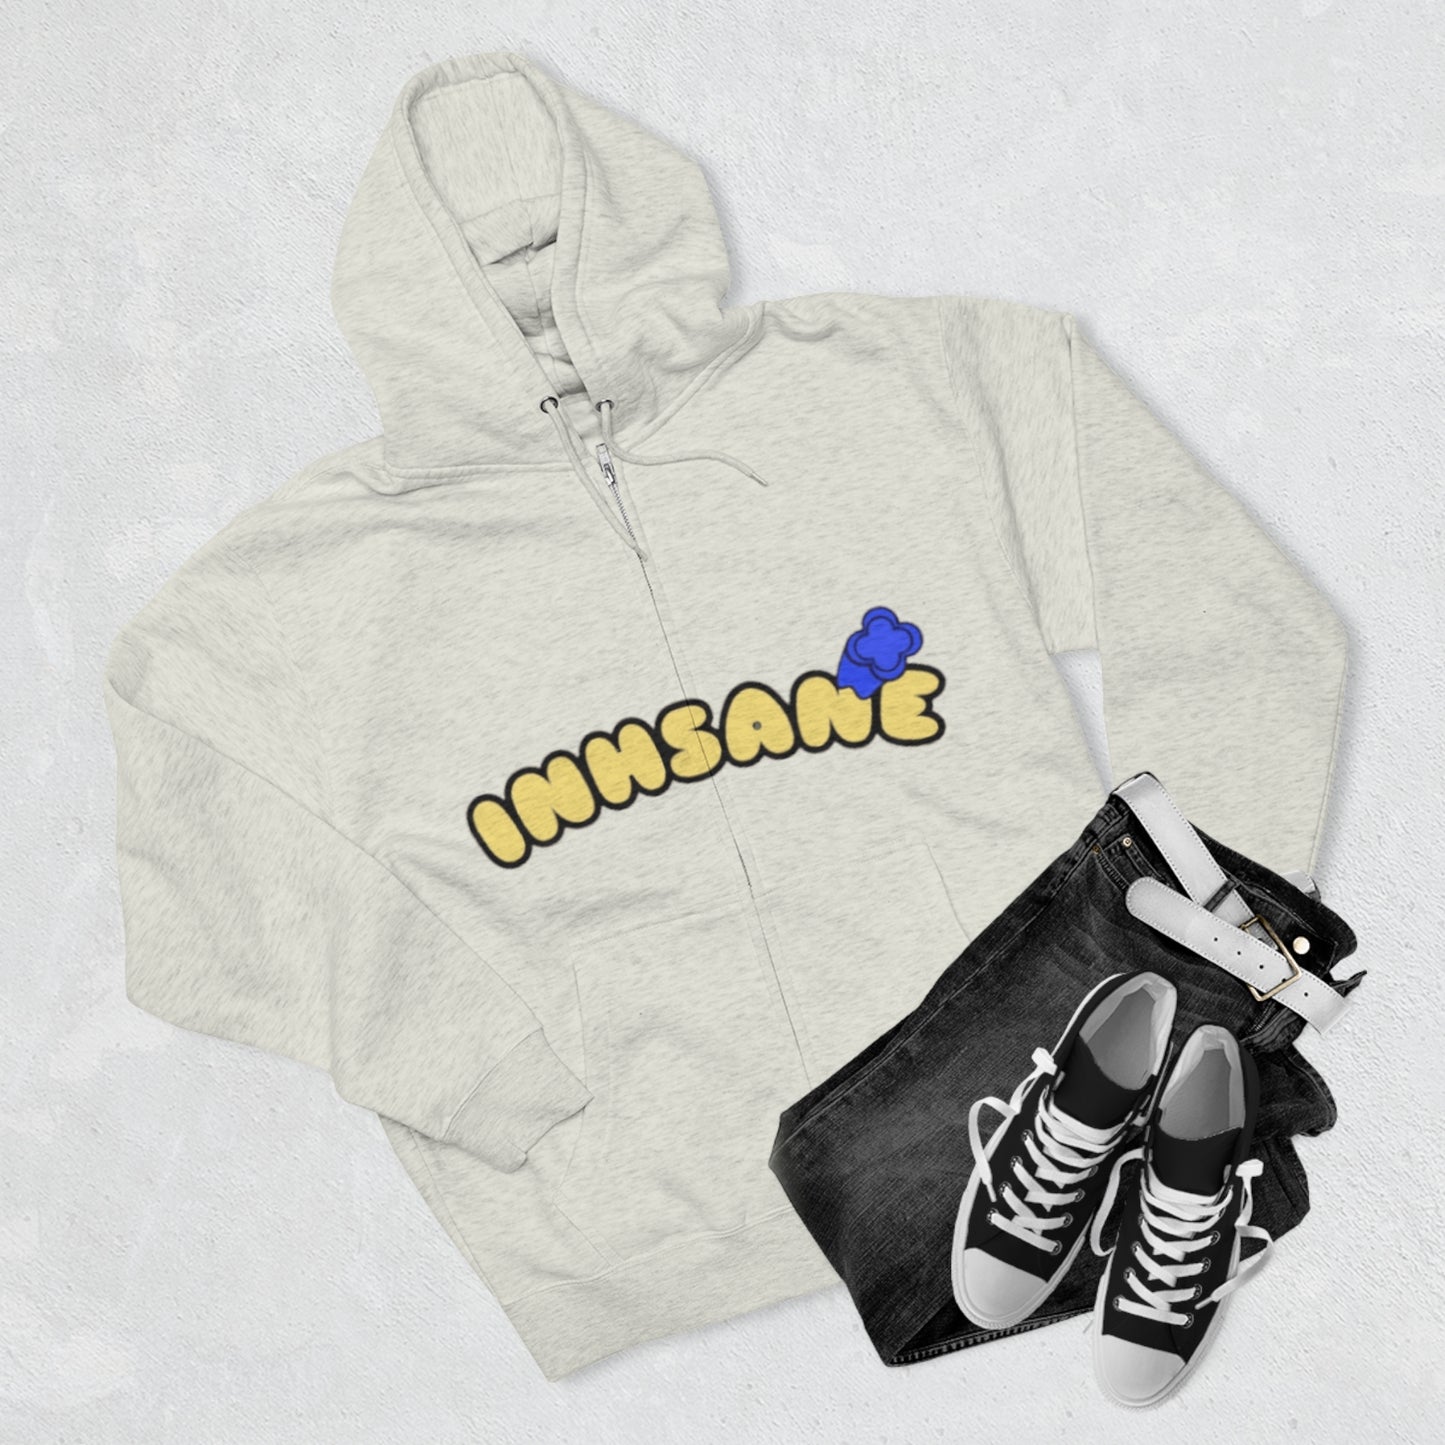 inhsane legacy v2 zipper hoodie